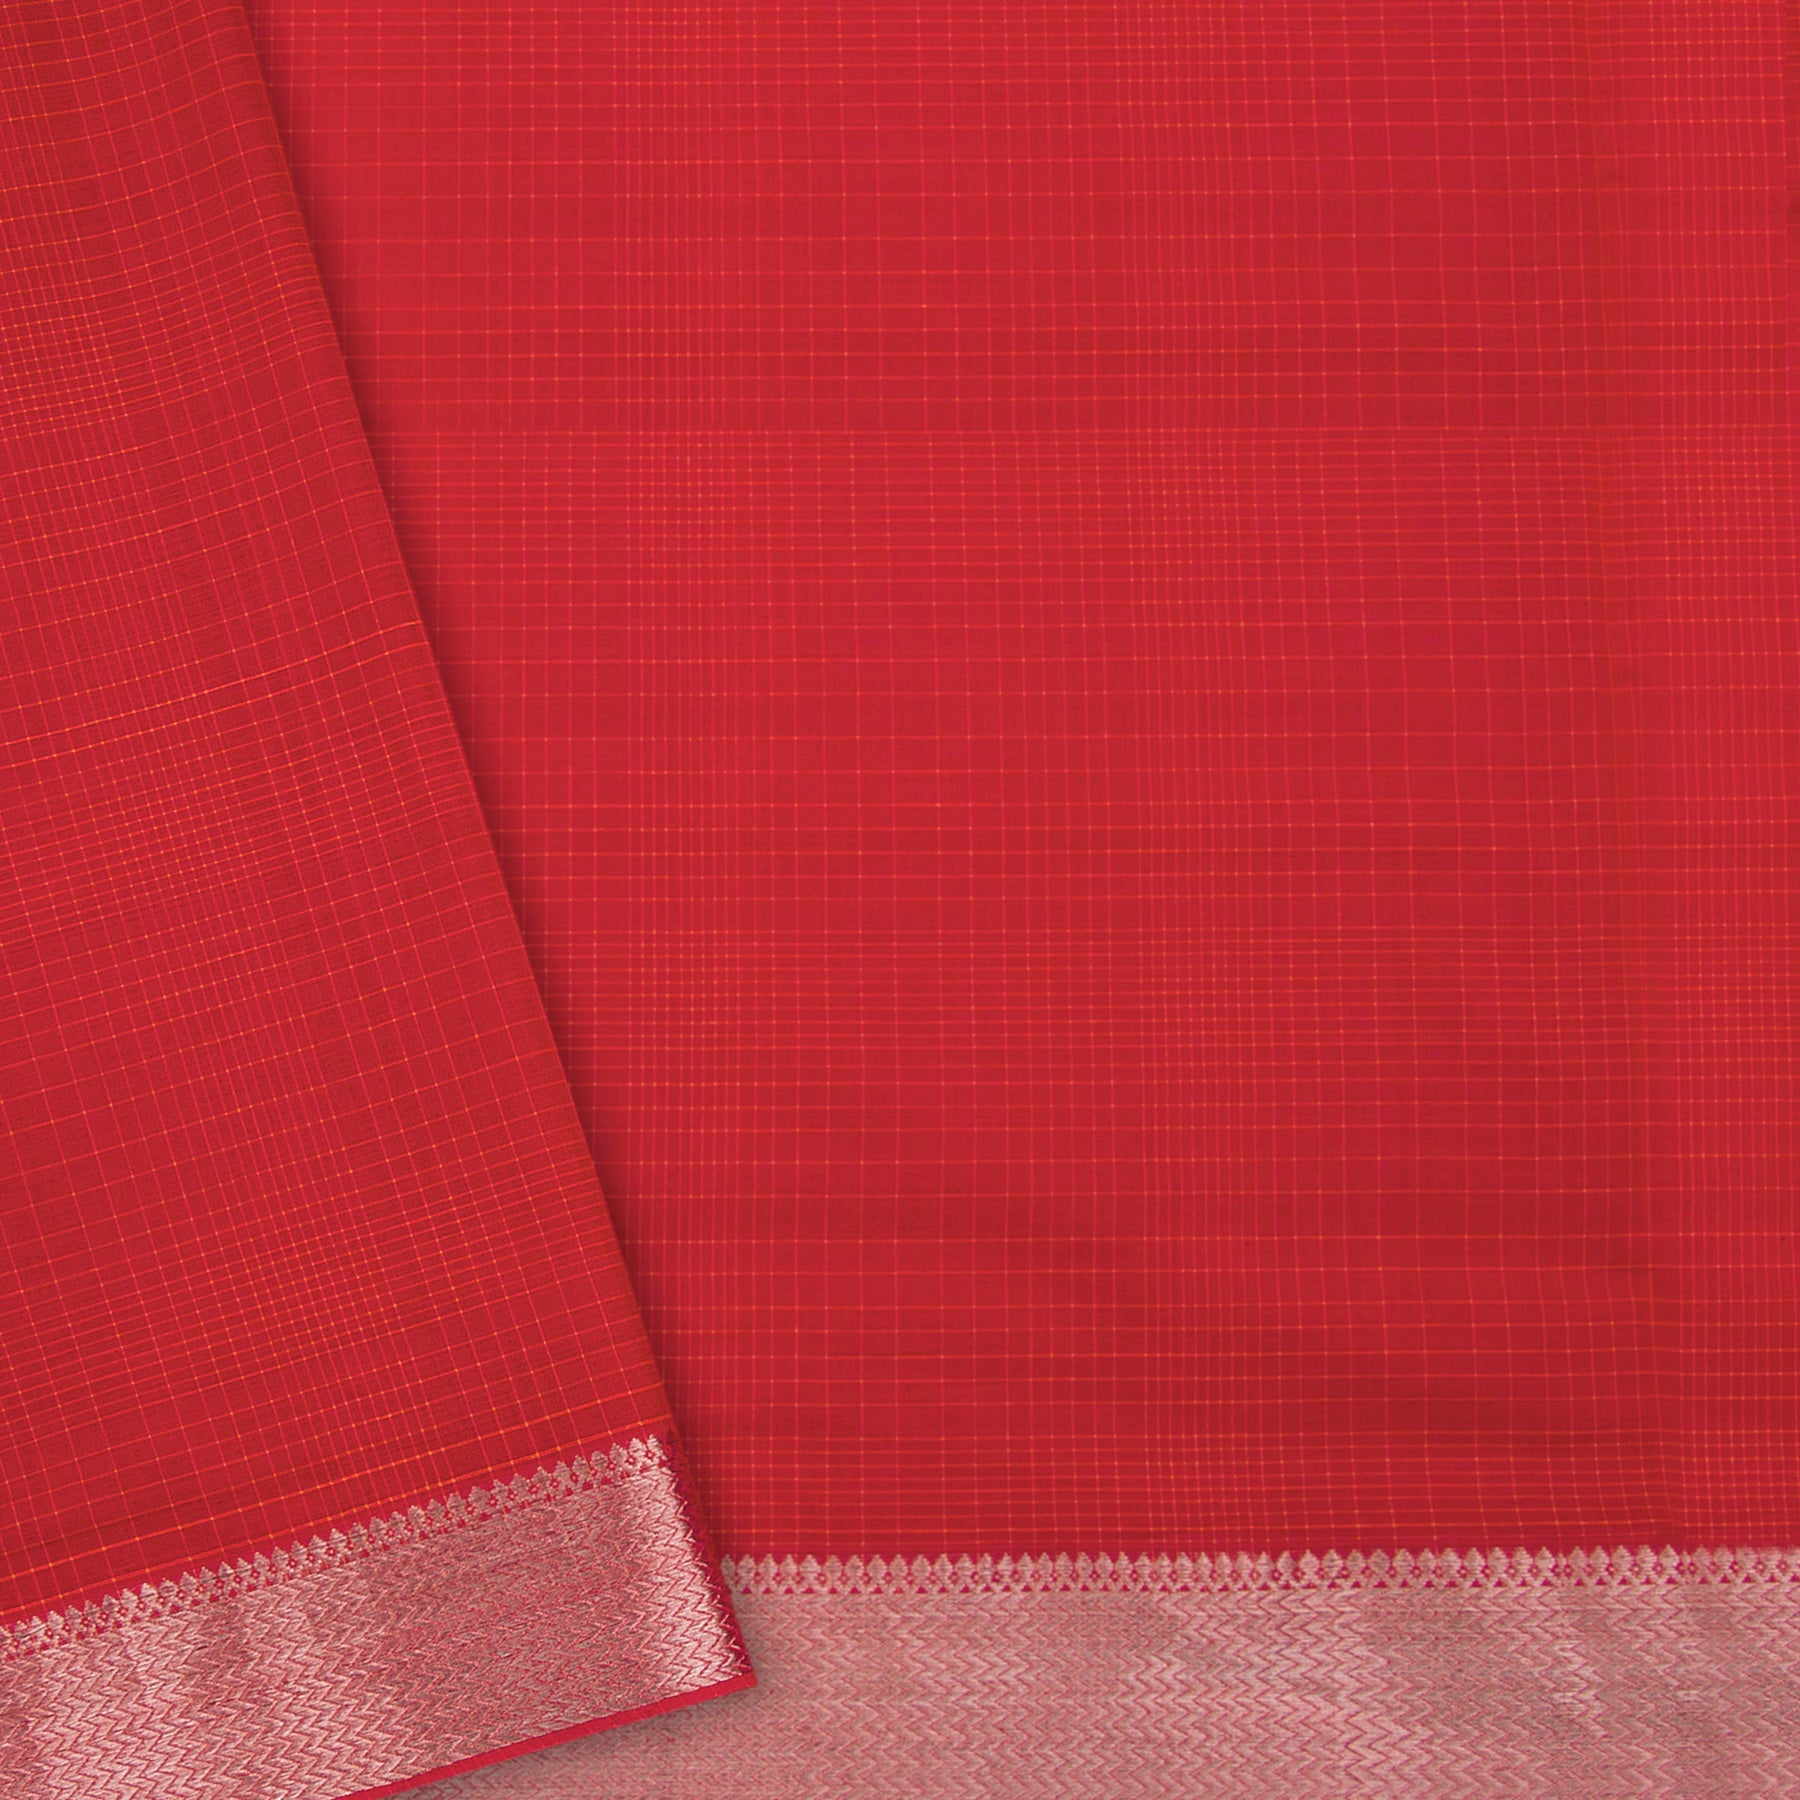 Kanakavalli Mangalgiri Cotton Sari 22-261-HS003-12753 - Blouse View